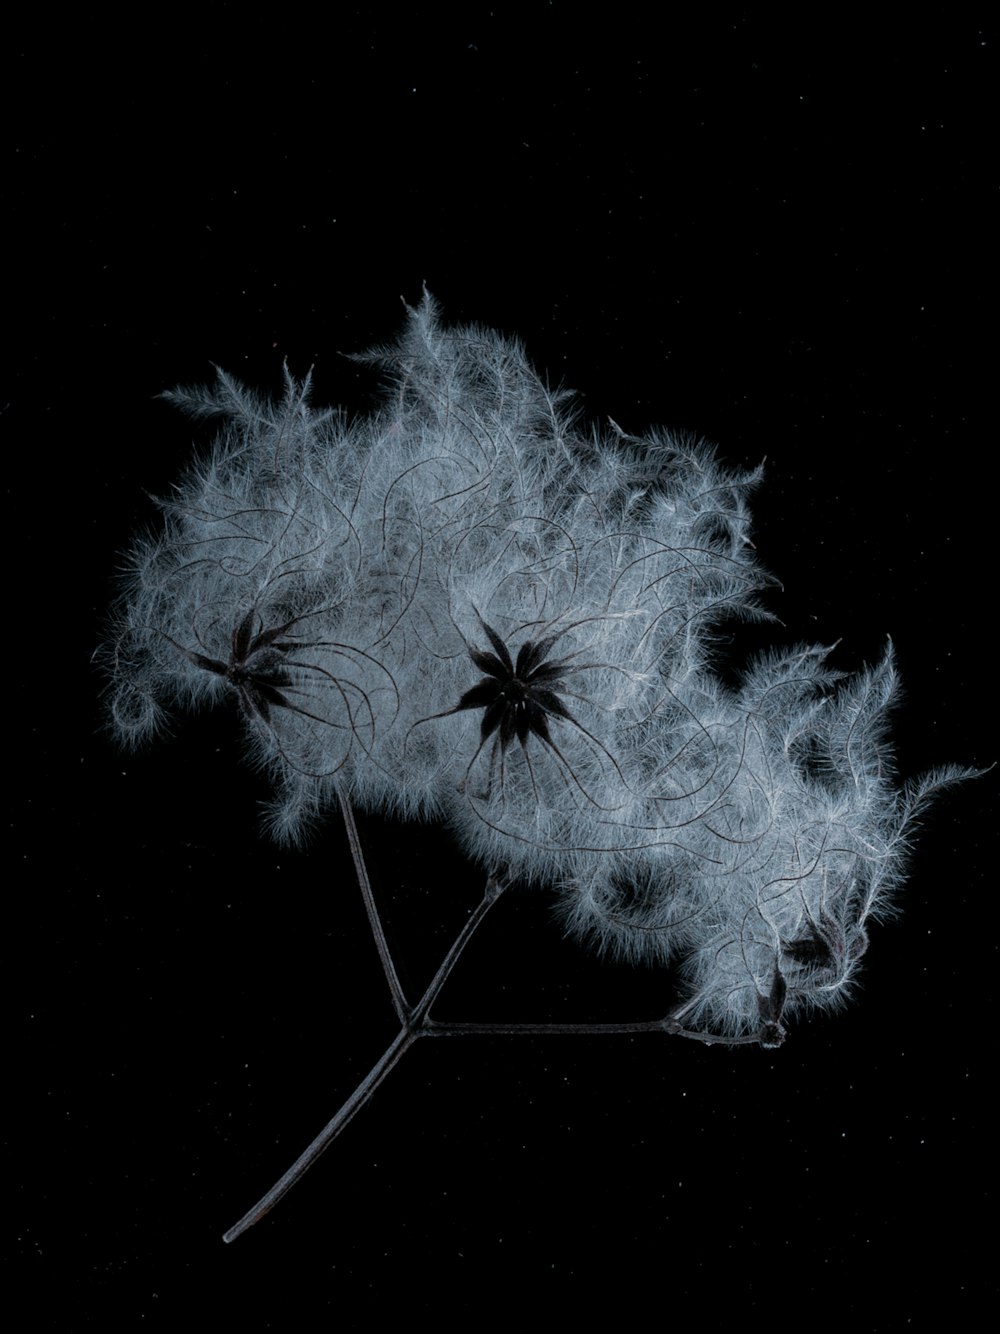 a close up of a dandelion